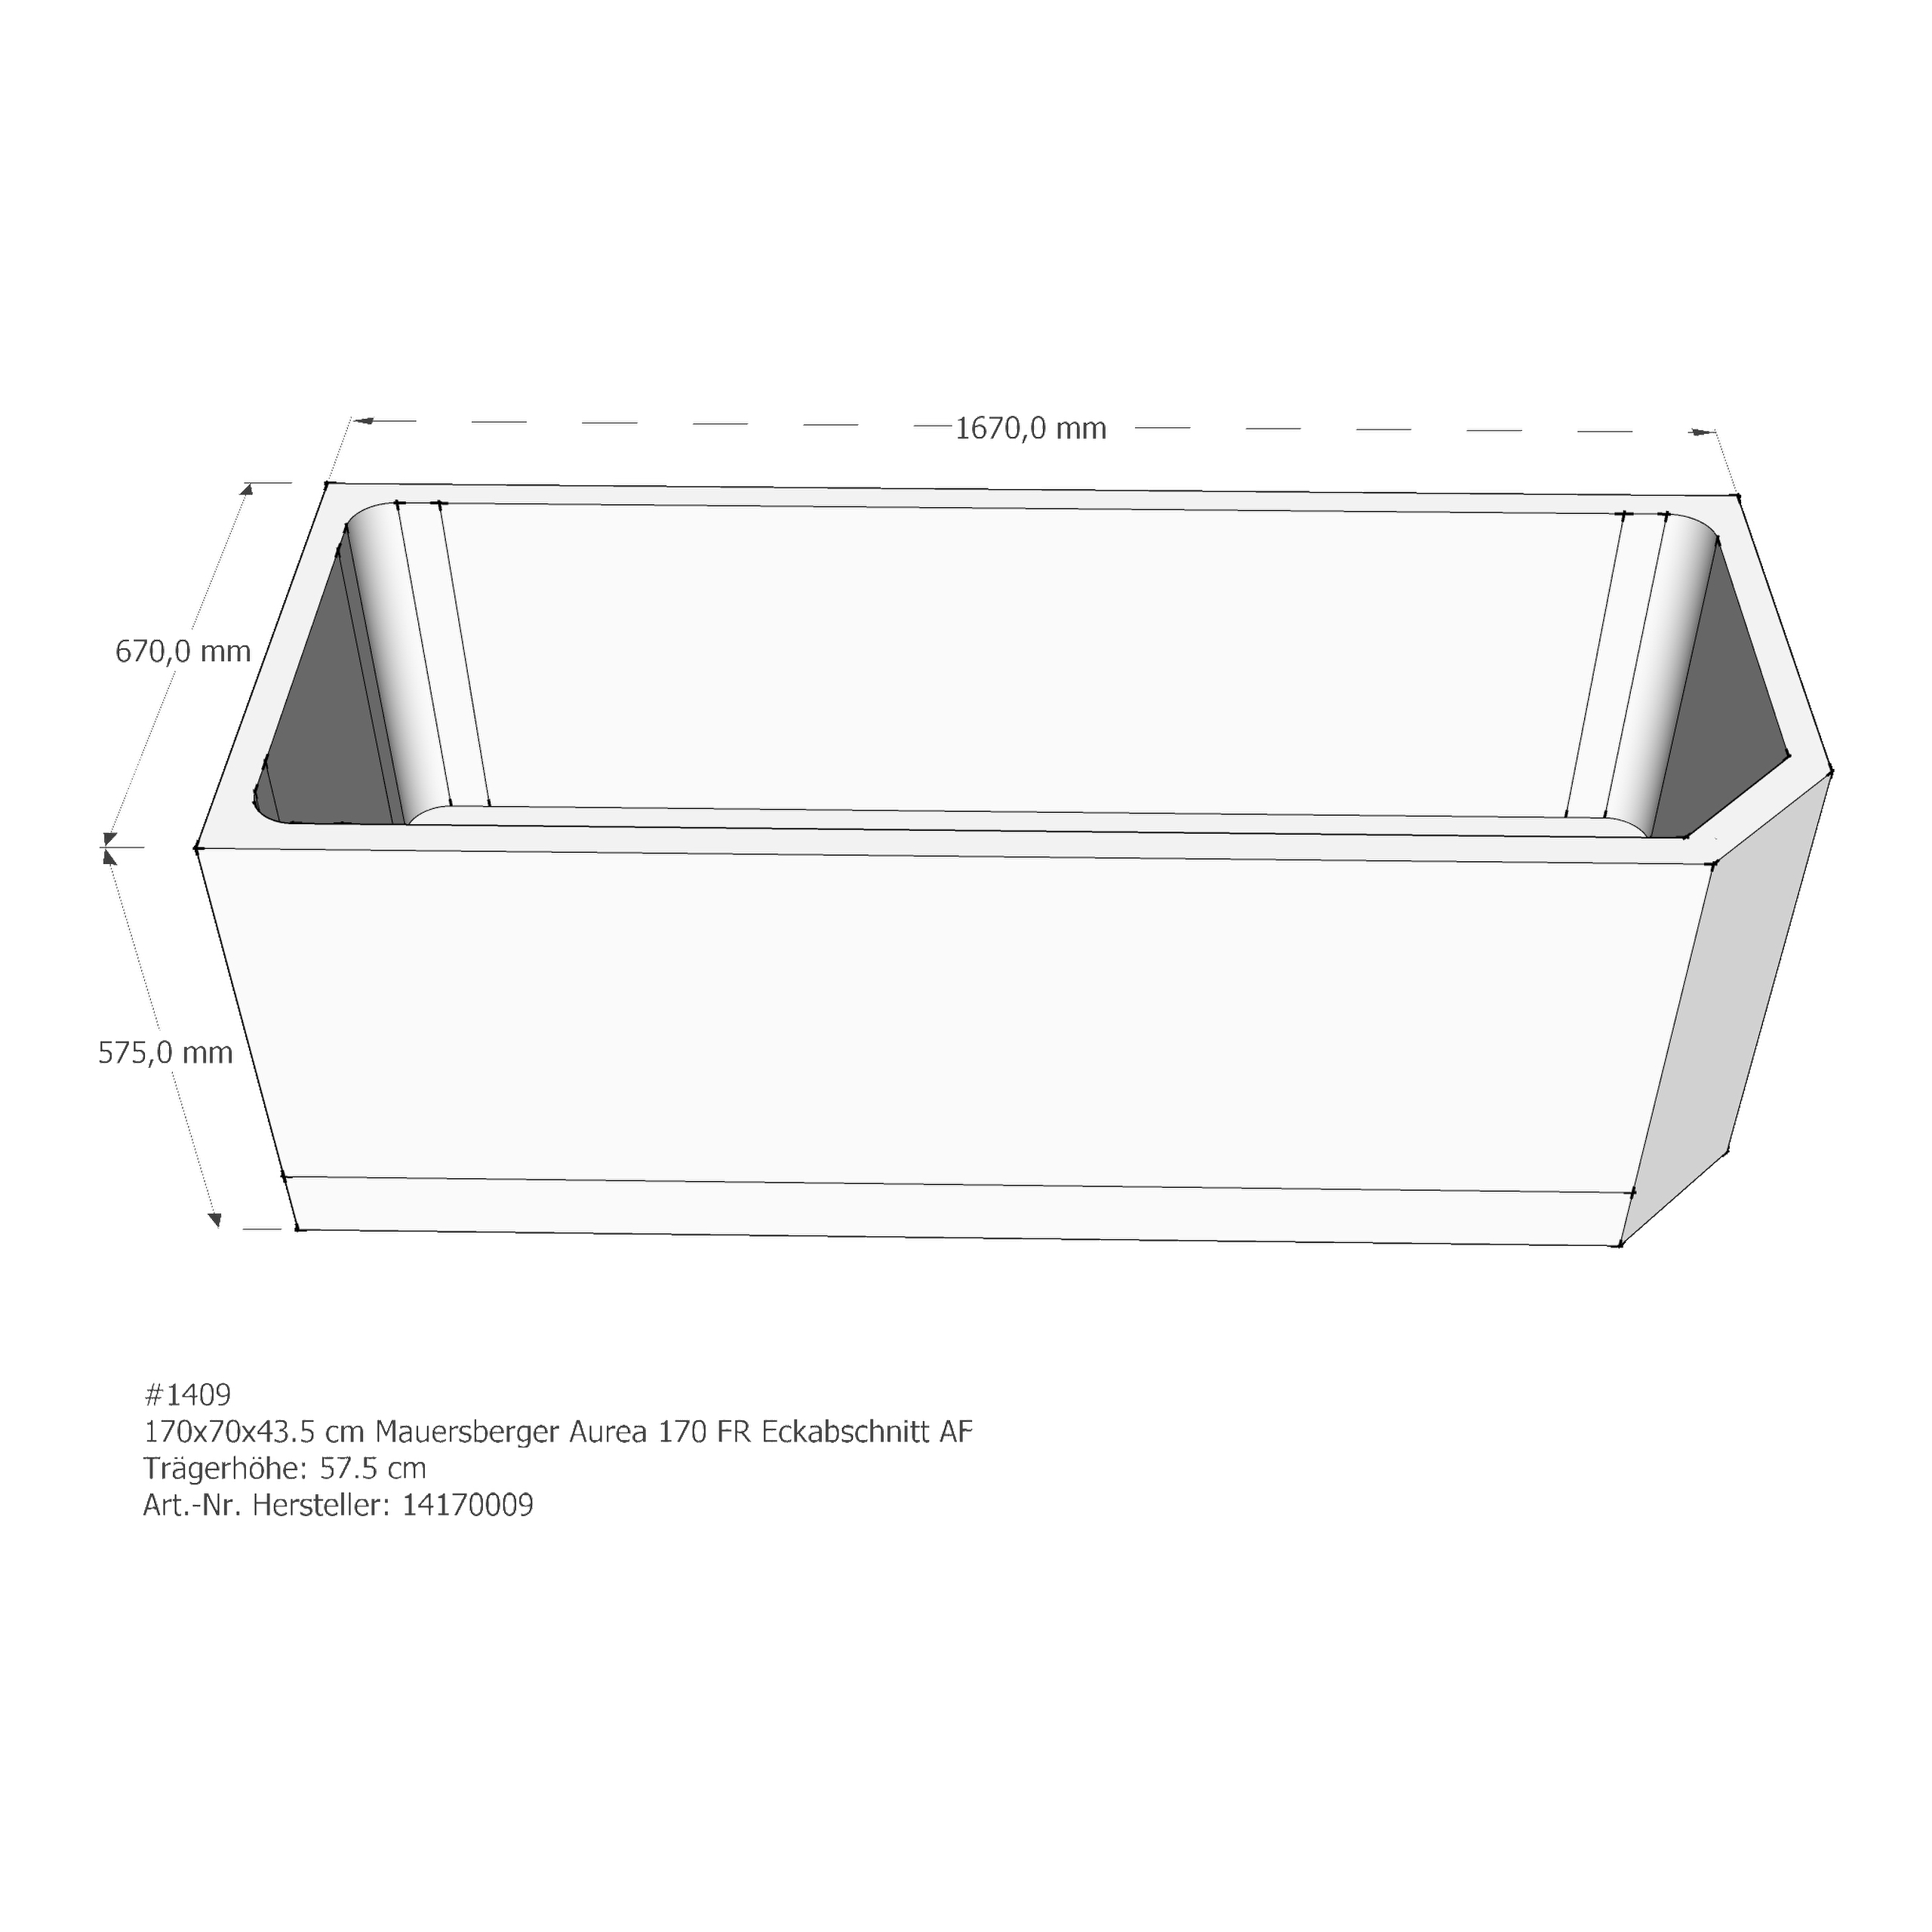 Badewannenträger für Mauersberger Aurea 170 FR 170 × 70 × 43,5 cm